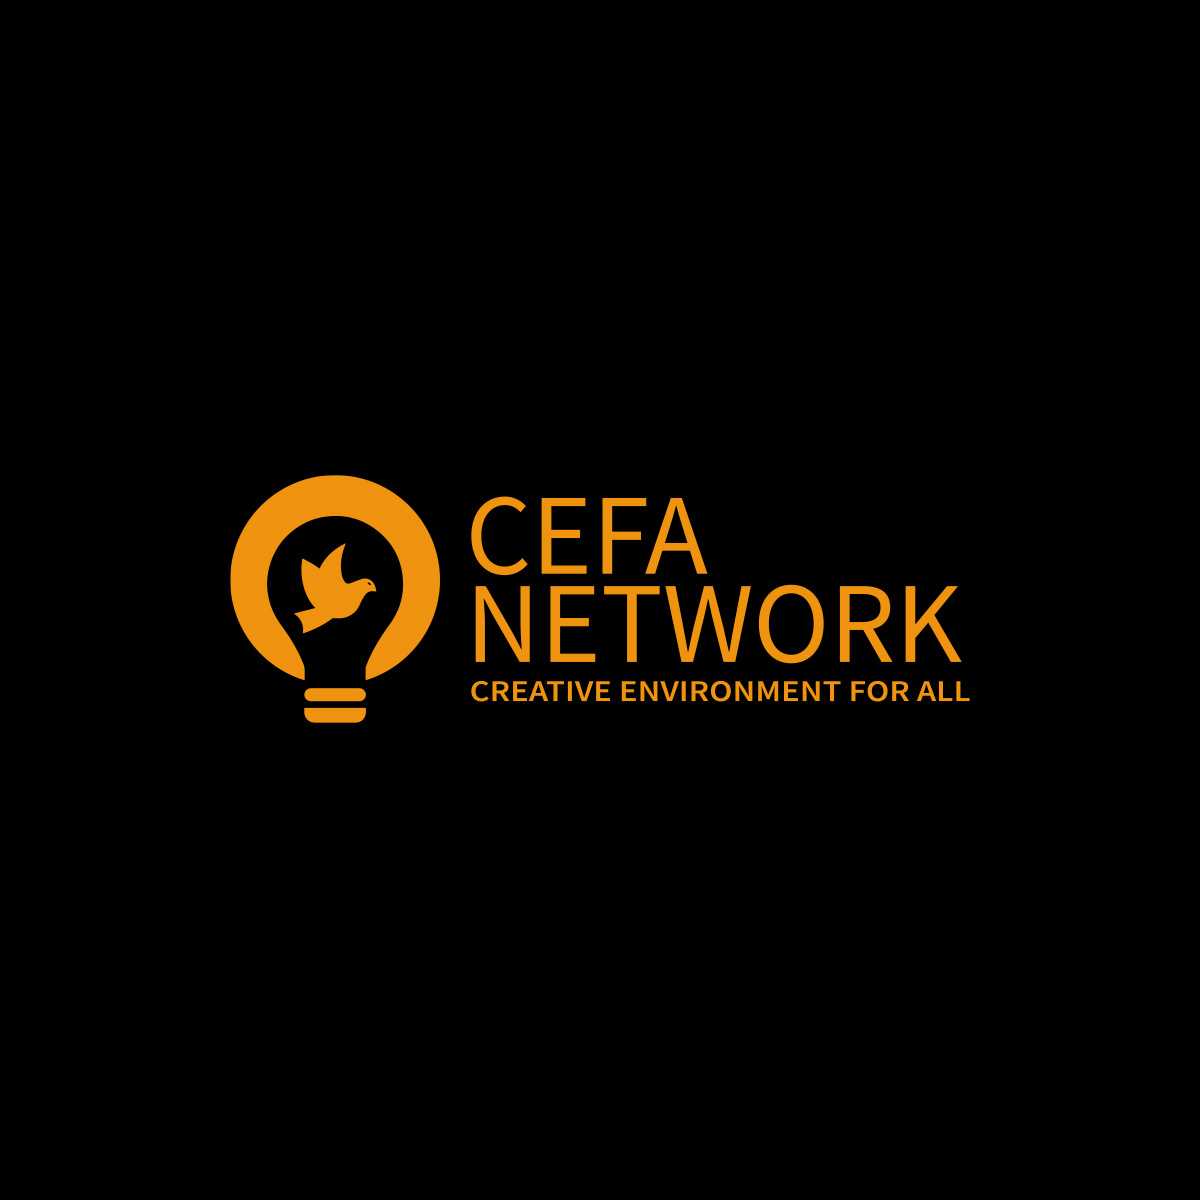 CEFA NETWORK